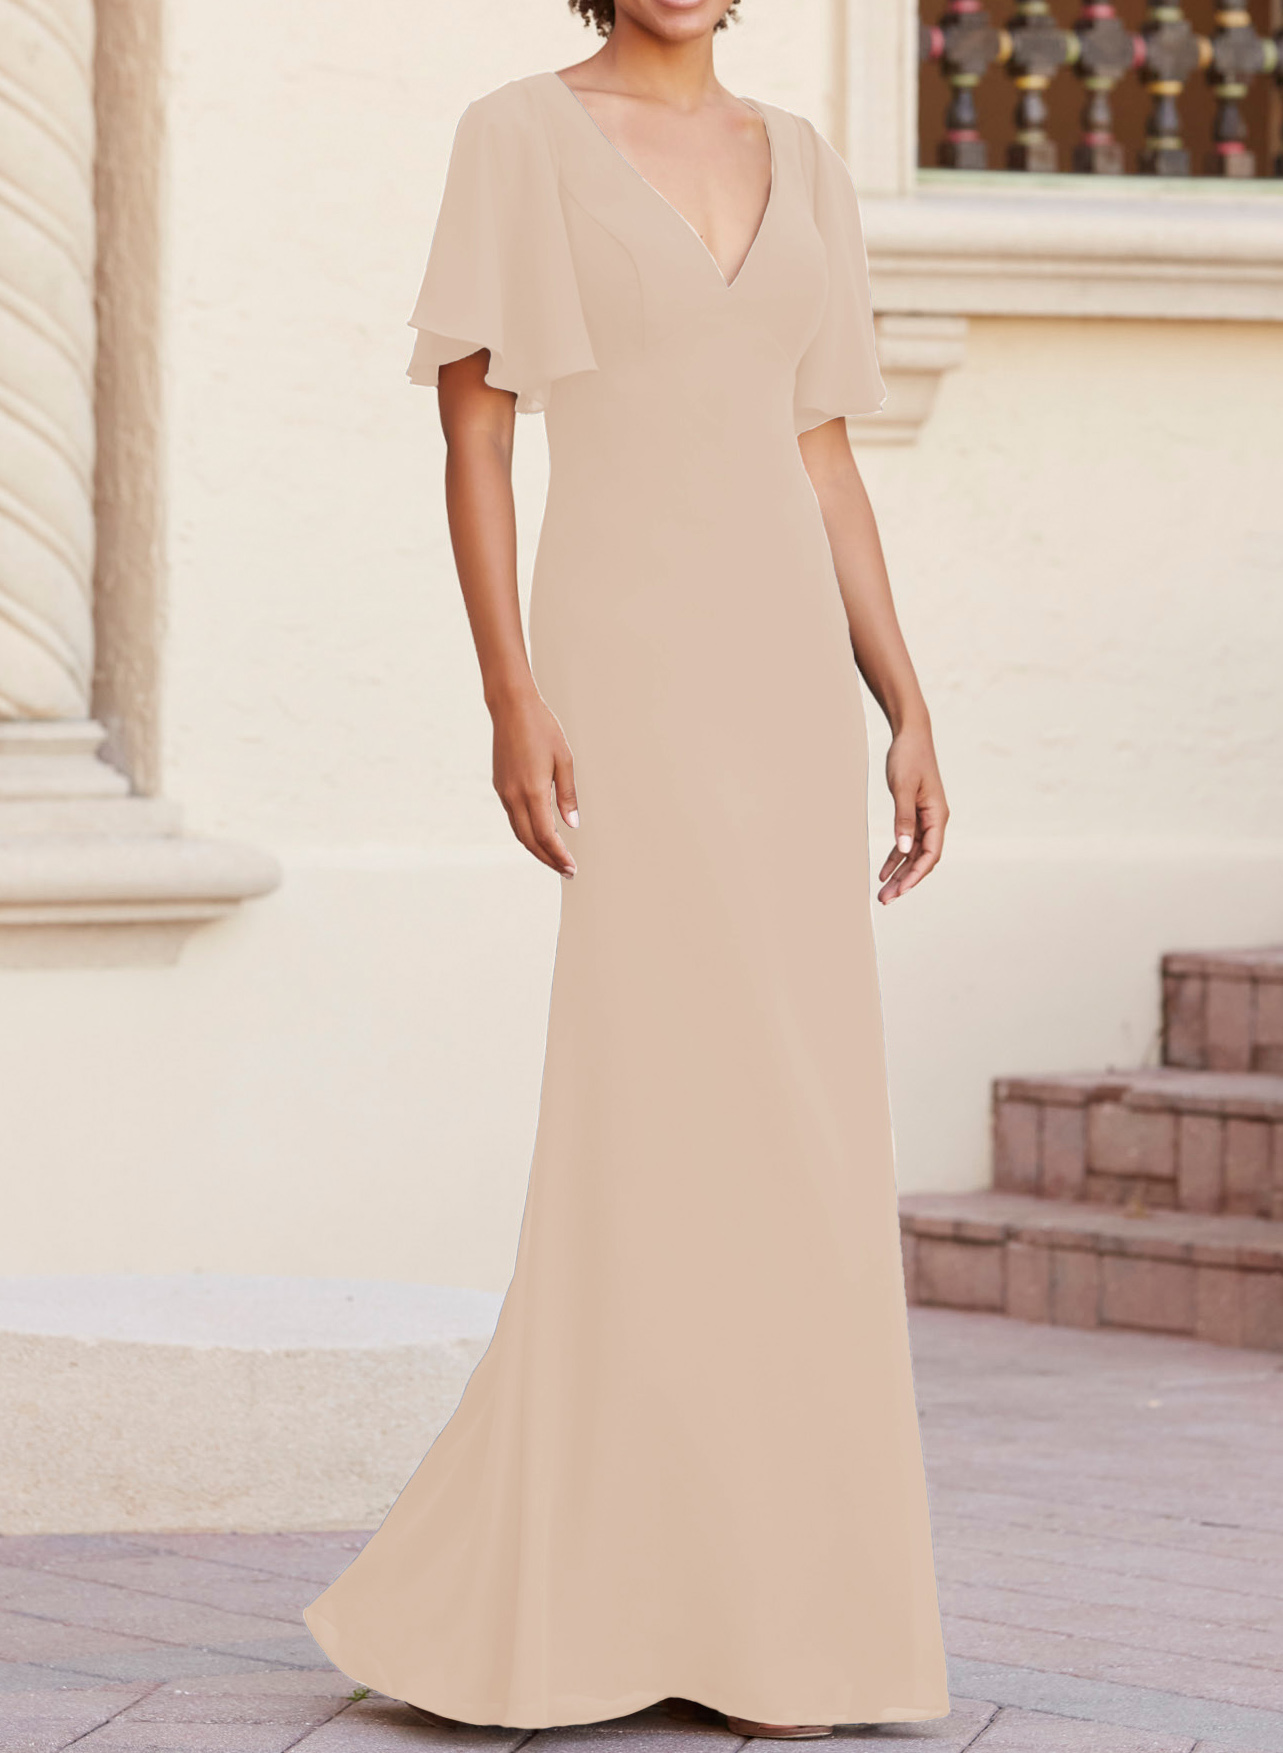  Short Sleeves Sheath/Column Bridesmaid Dresses With Back Hole